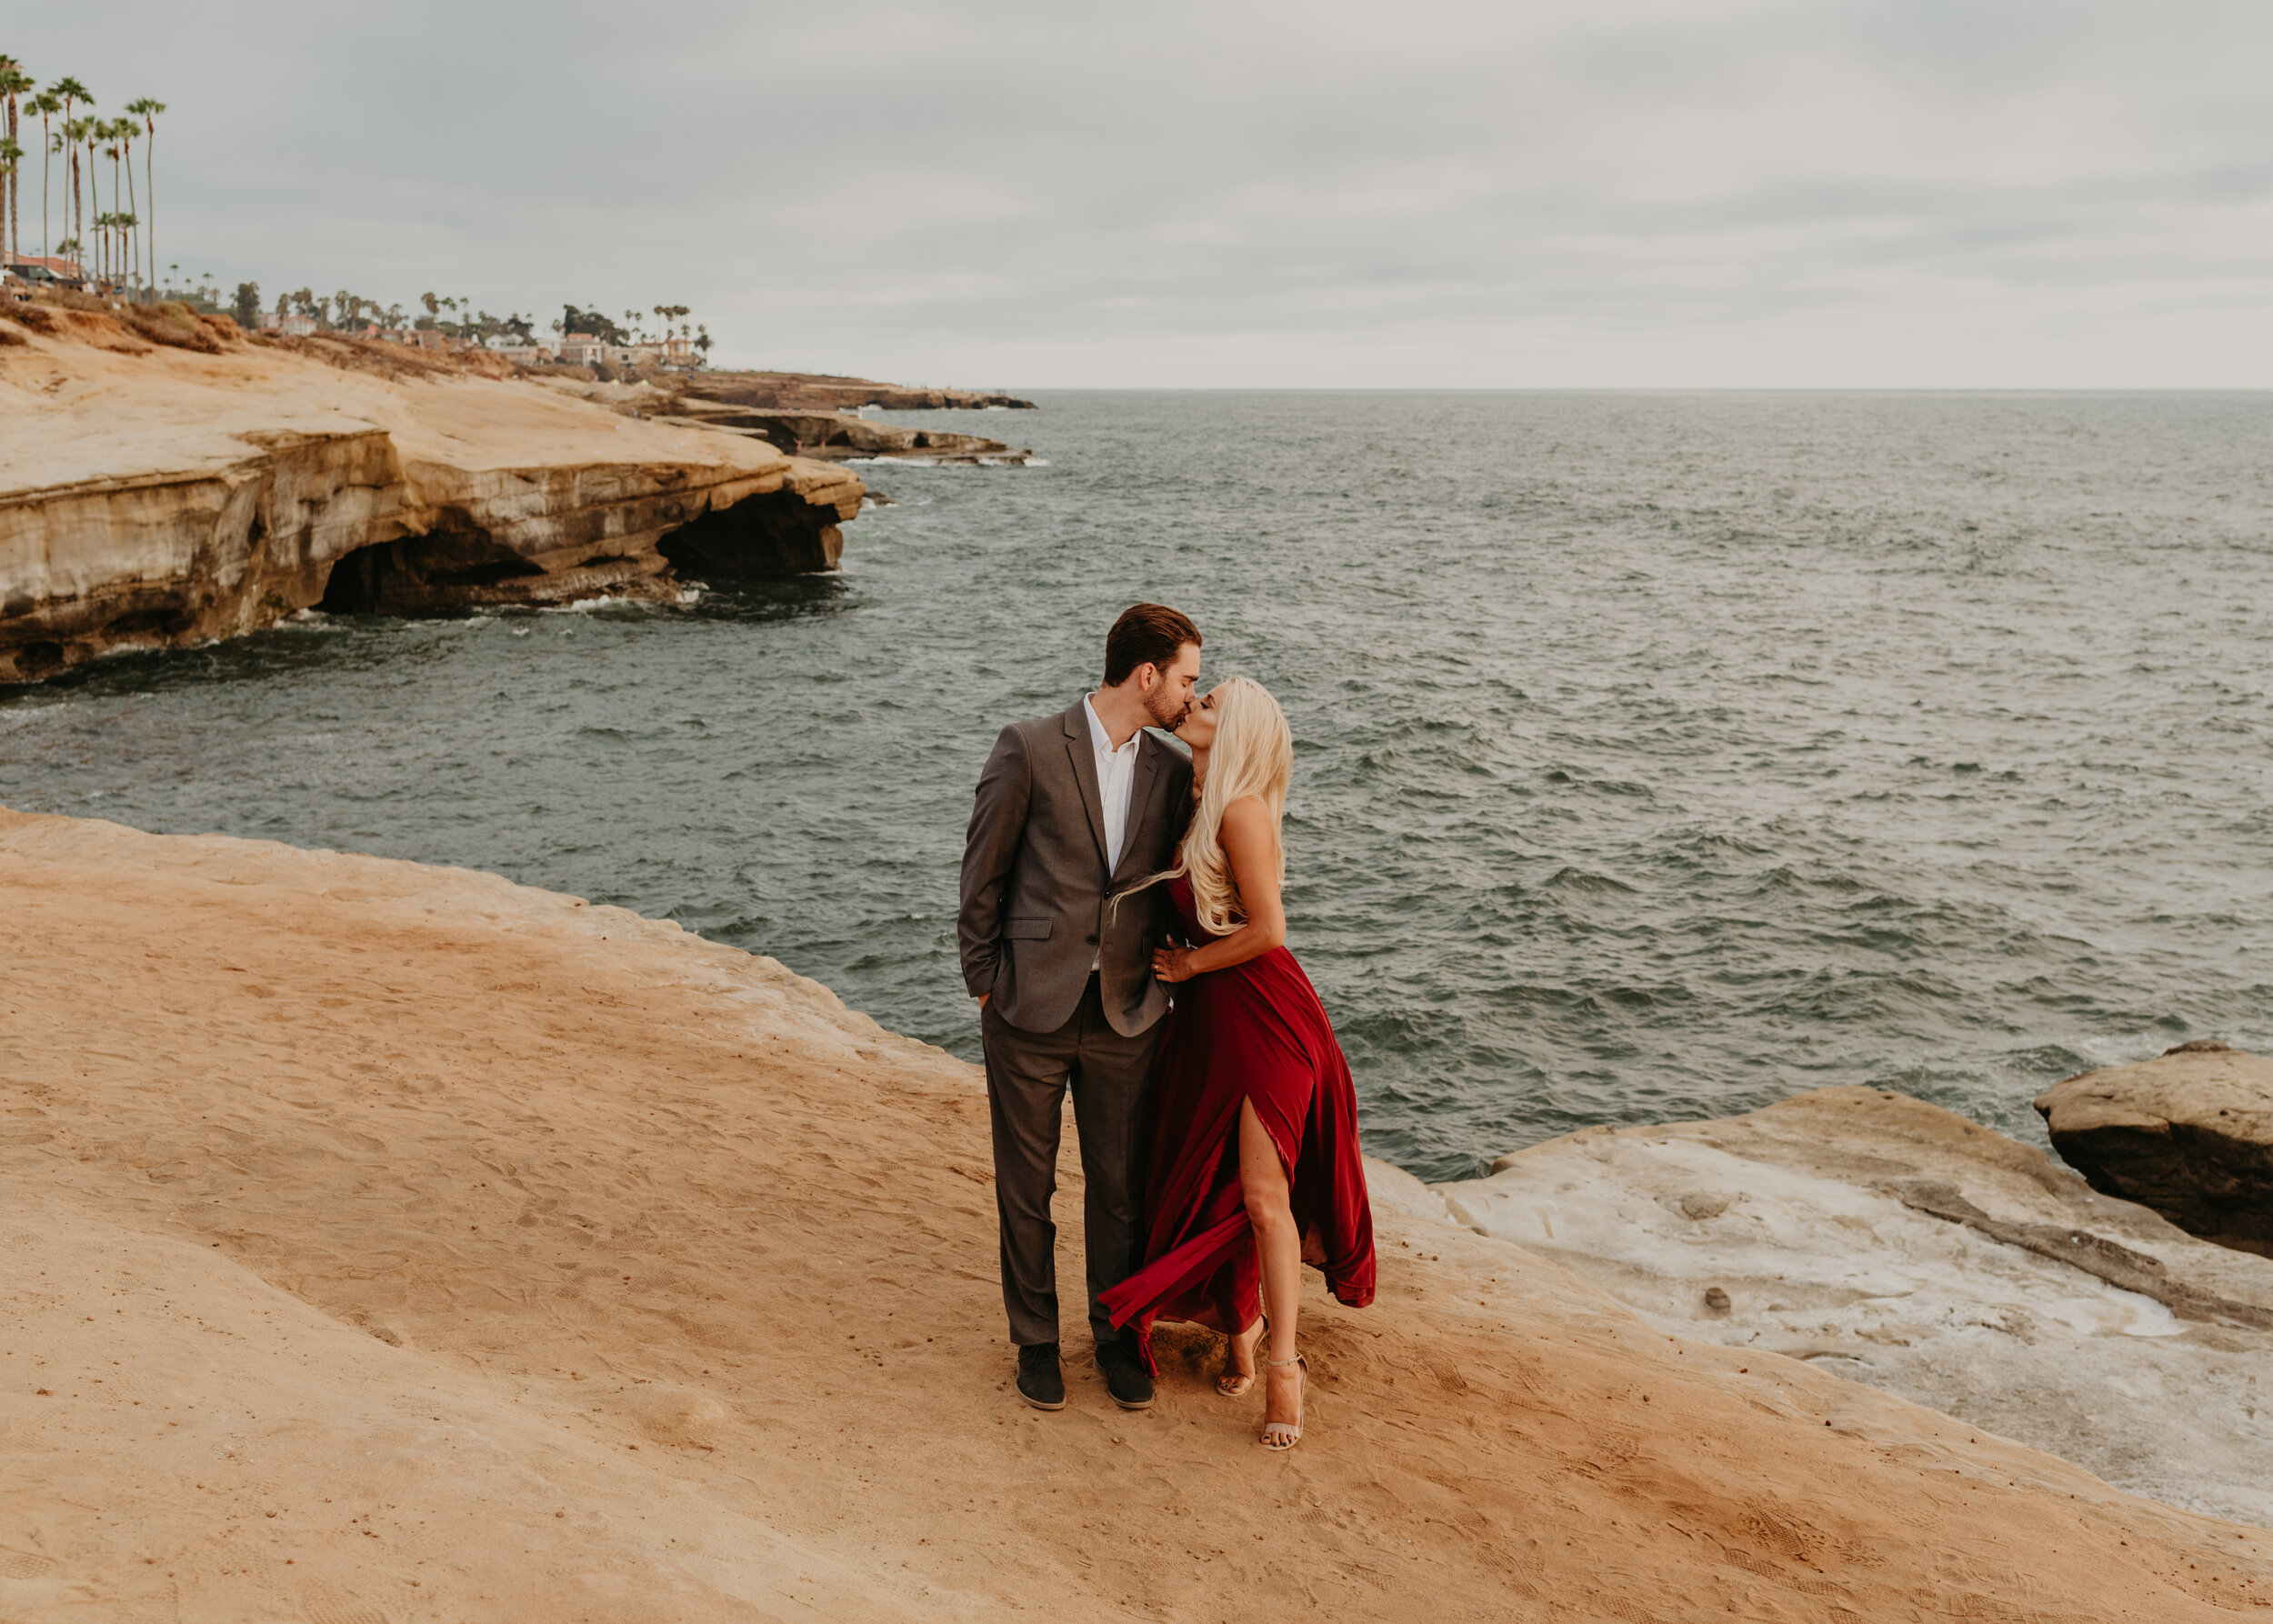 Sunset Cliffs Engagement Session | Couples Photos | San Diego Elopement Photographer | San Diego Engagement | California Beach Cliffs